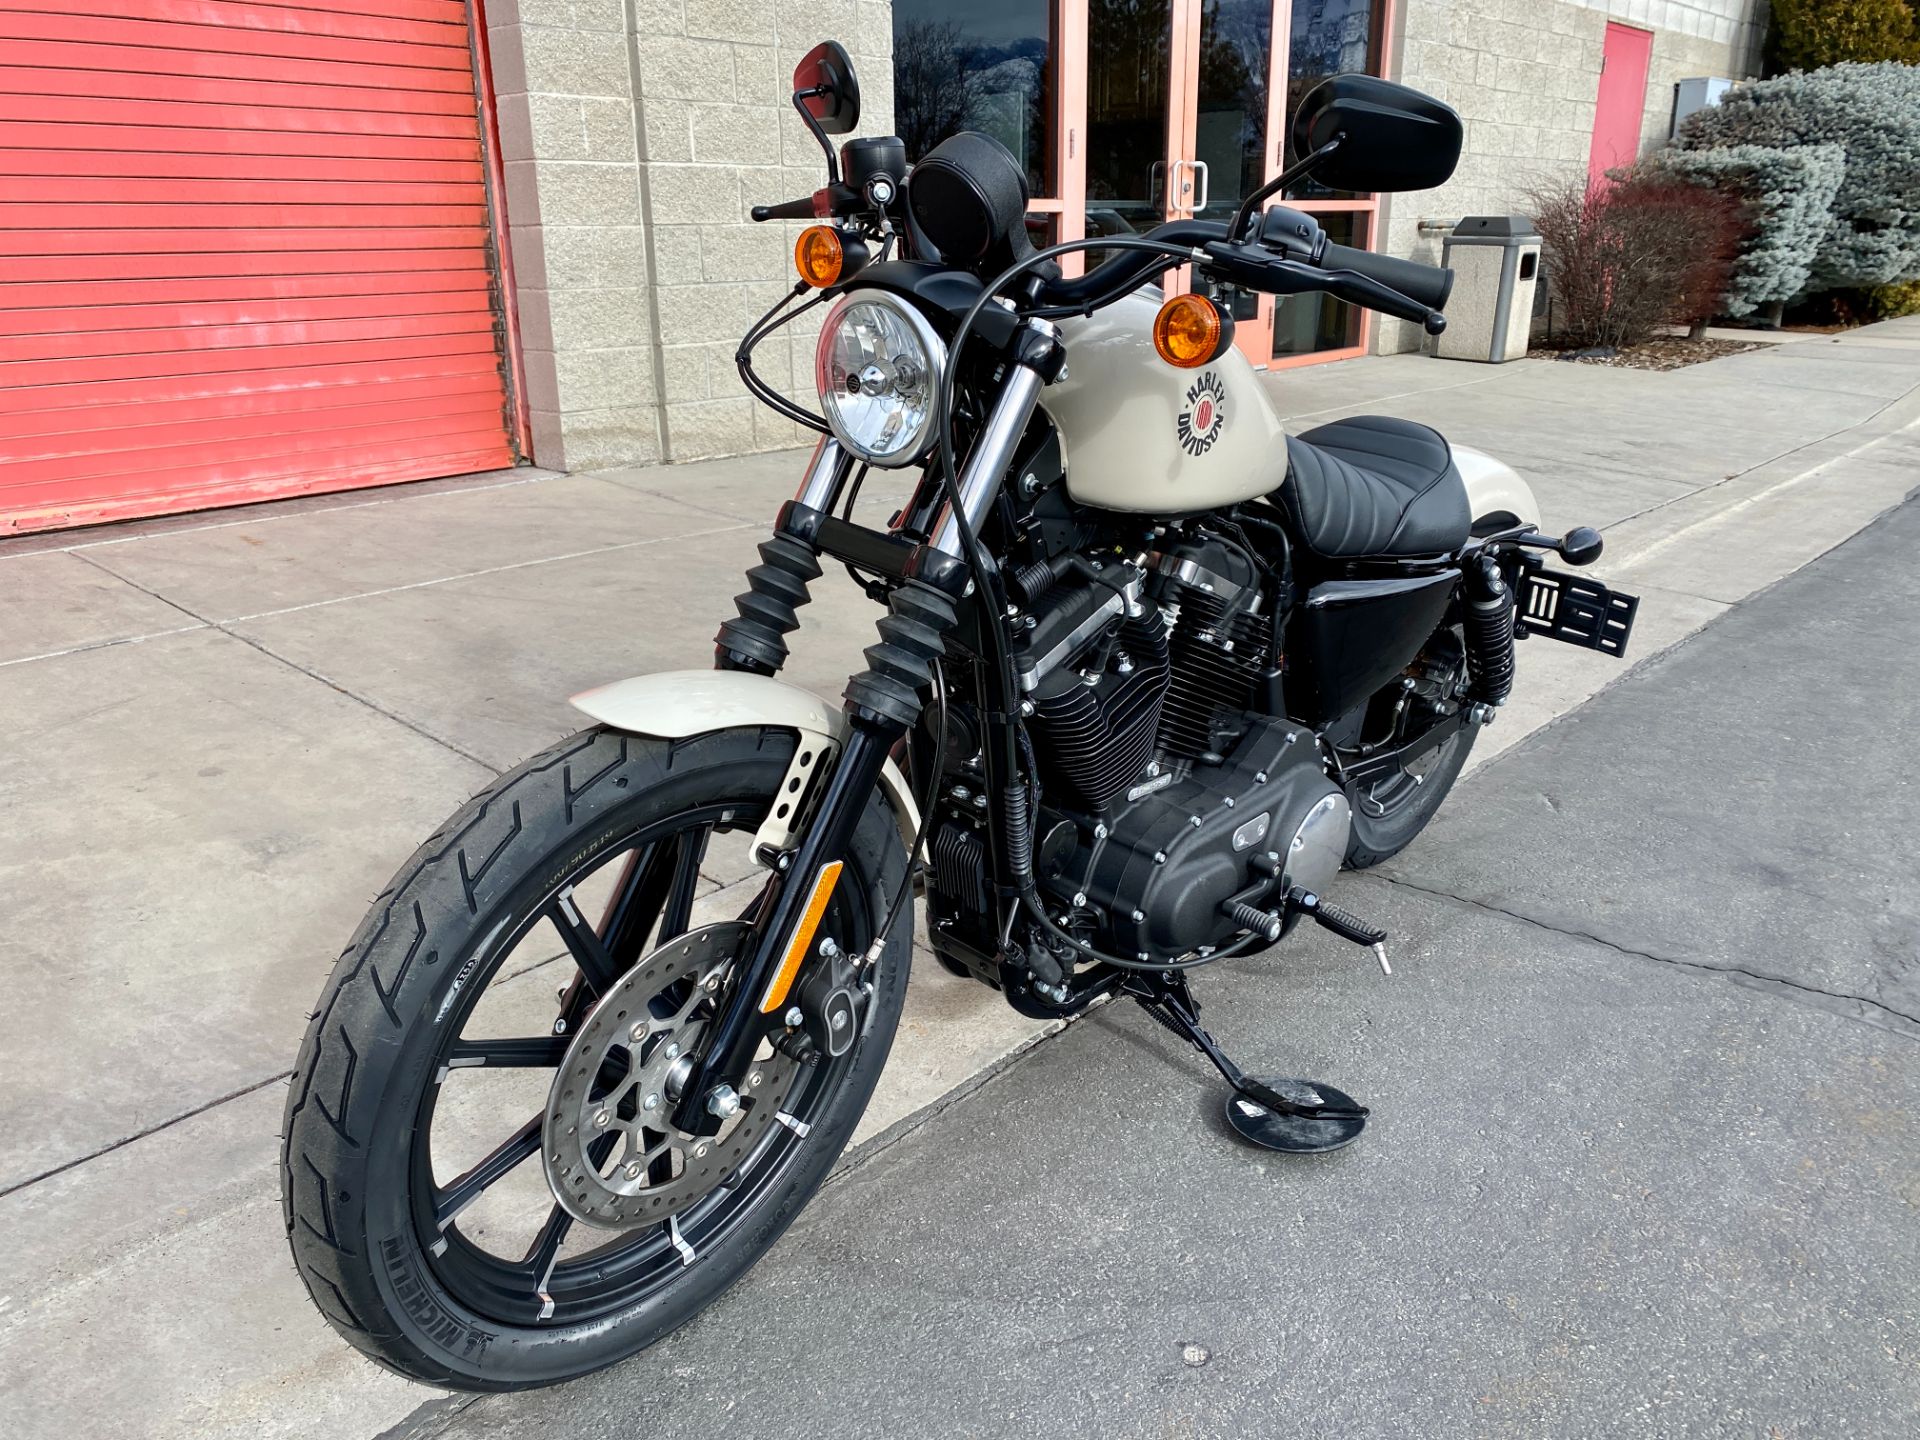 2022 Harley-Davidson Iron 883™ in Sandy, Utah - Photo 8